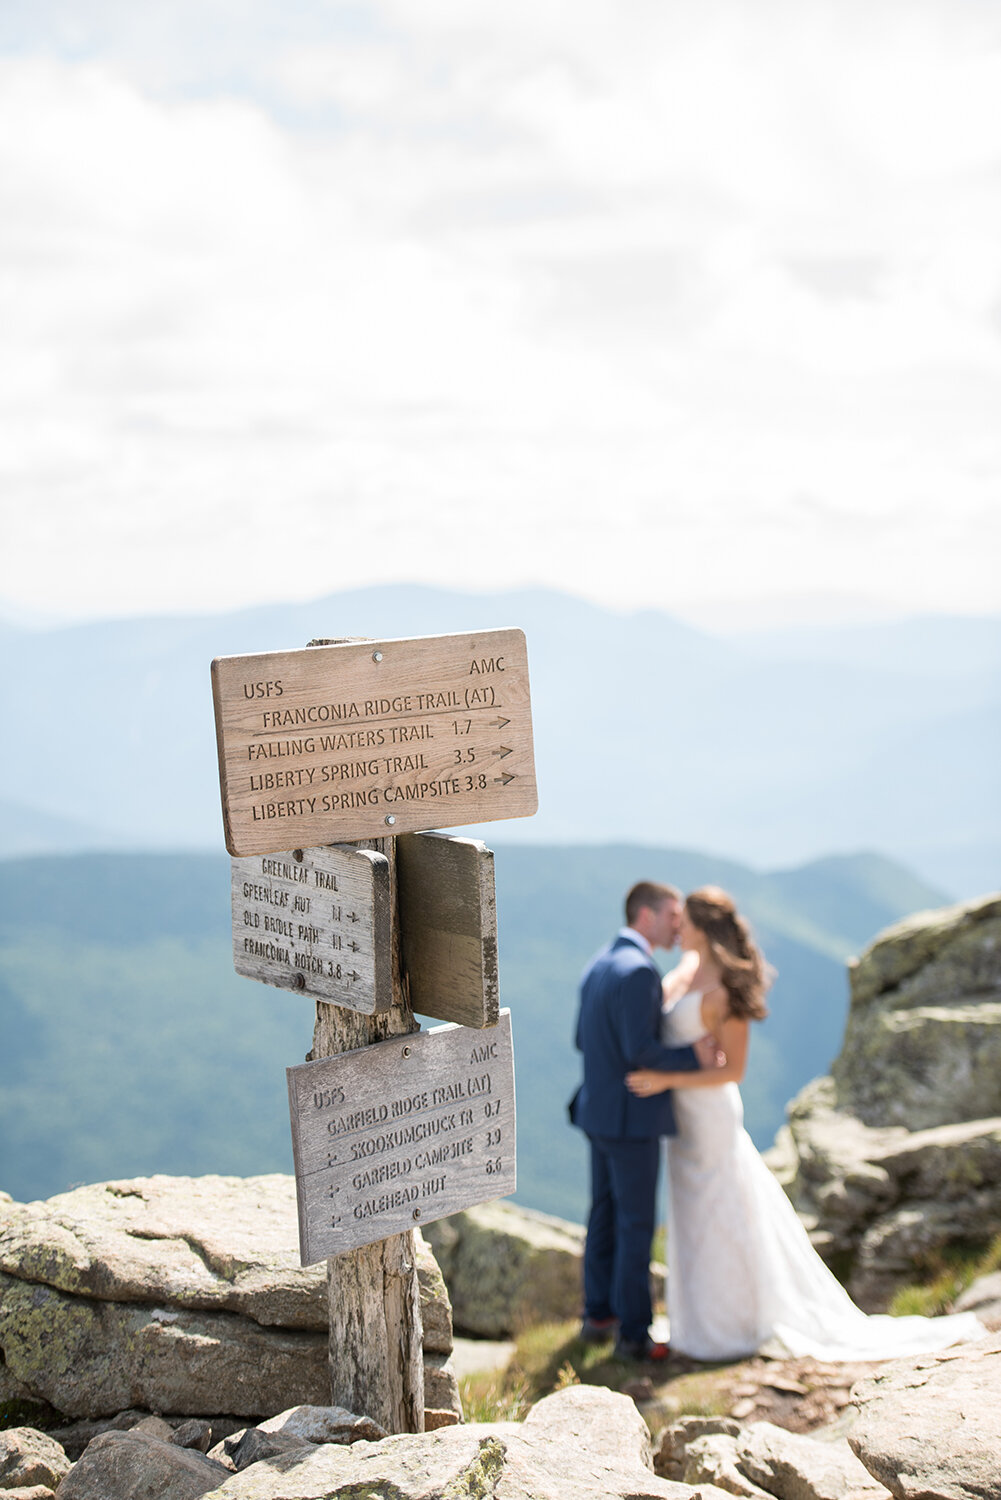 081818 - New Hampshire Wedding Photographers, Adventure Wedding Photographers - 1.jpg